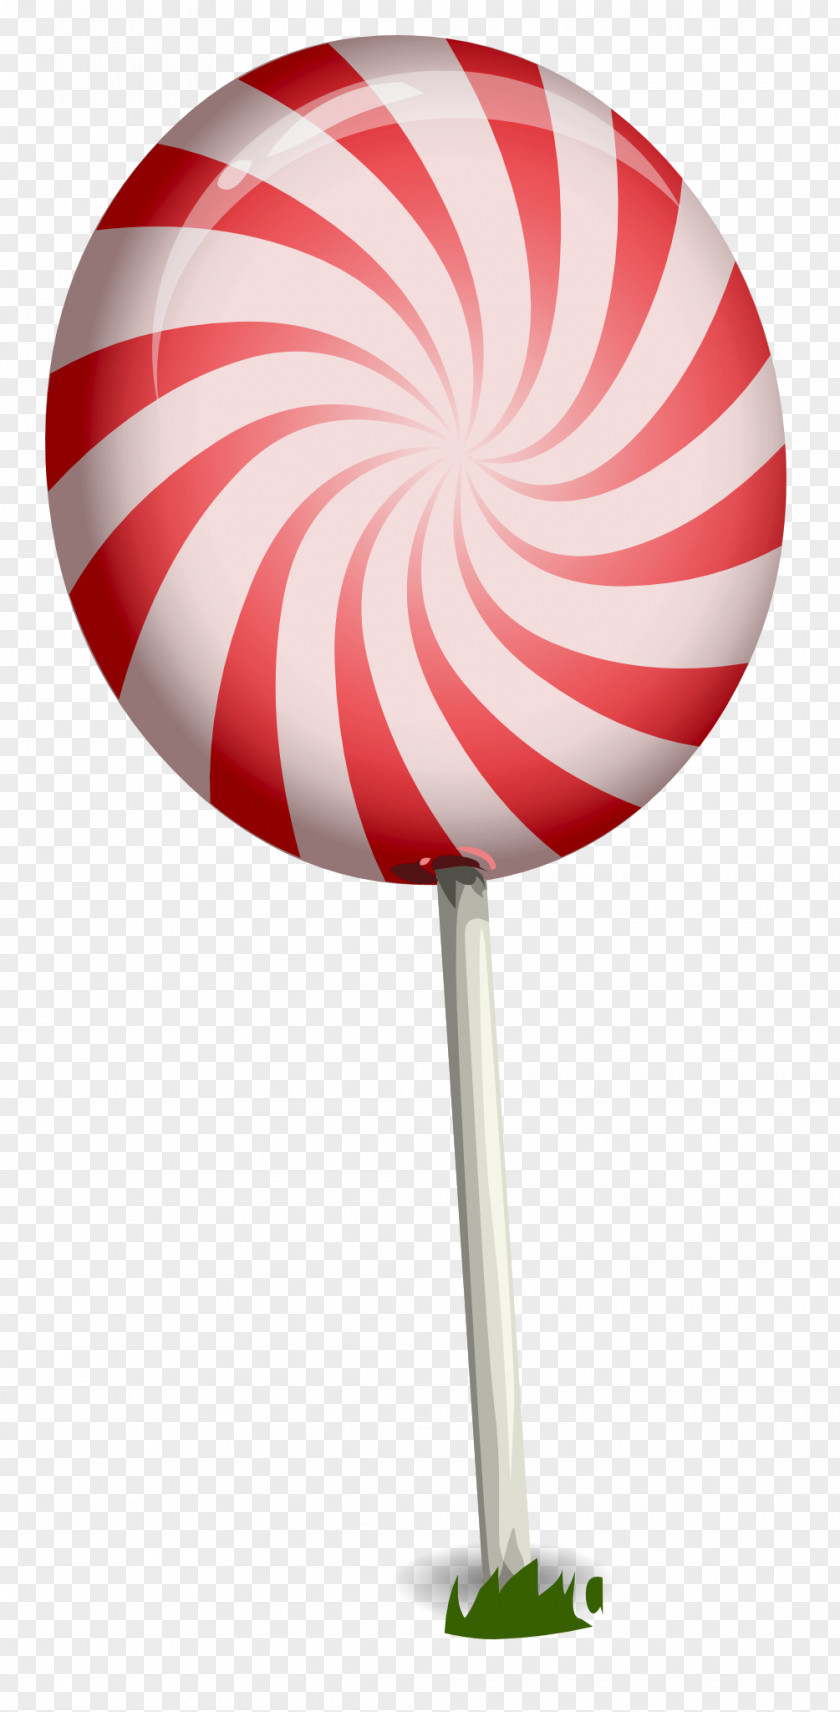 Candy Lollipop Stick PNG